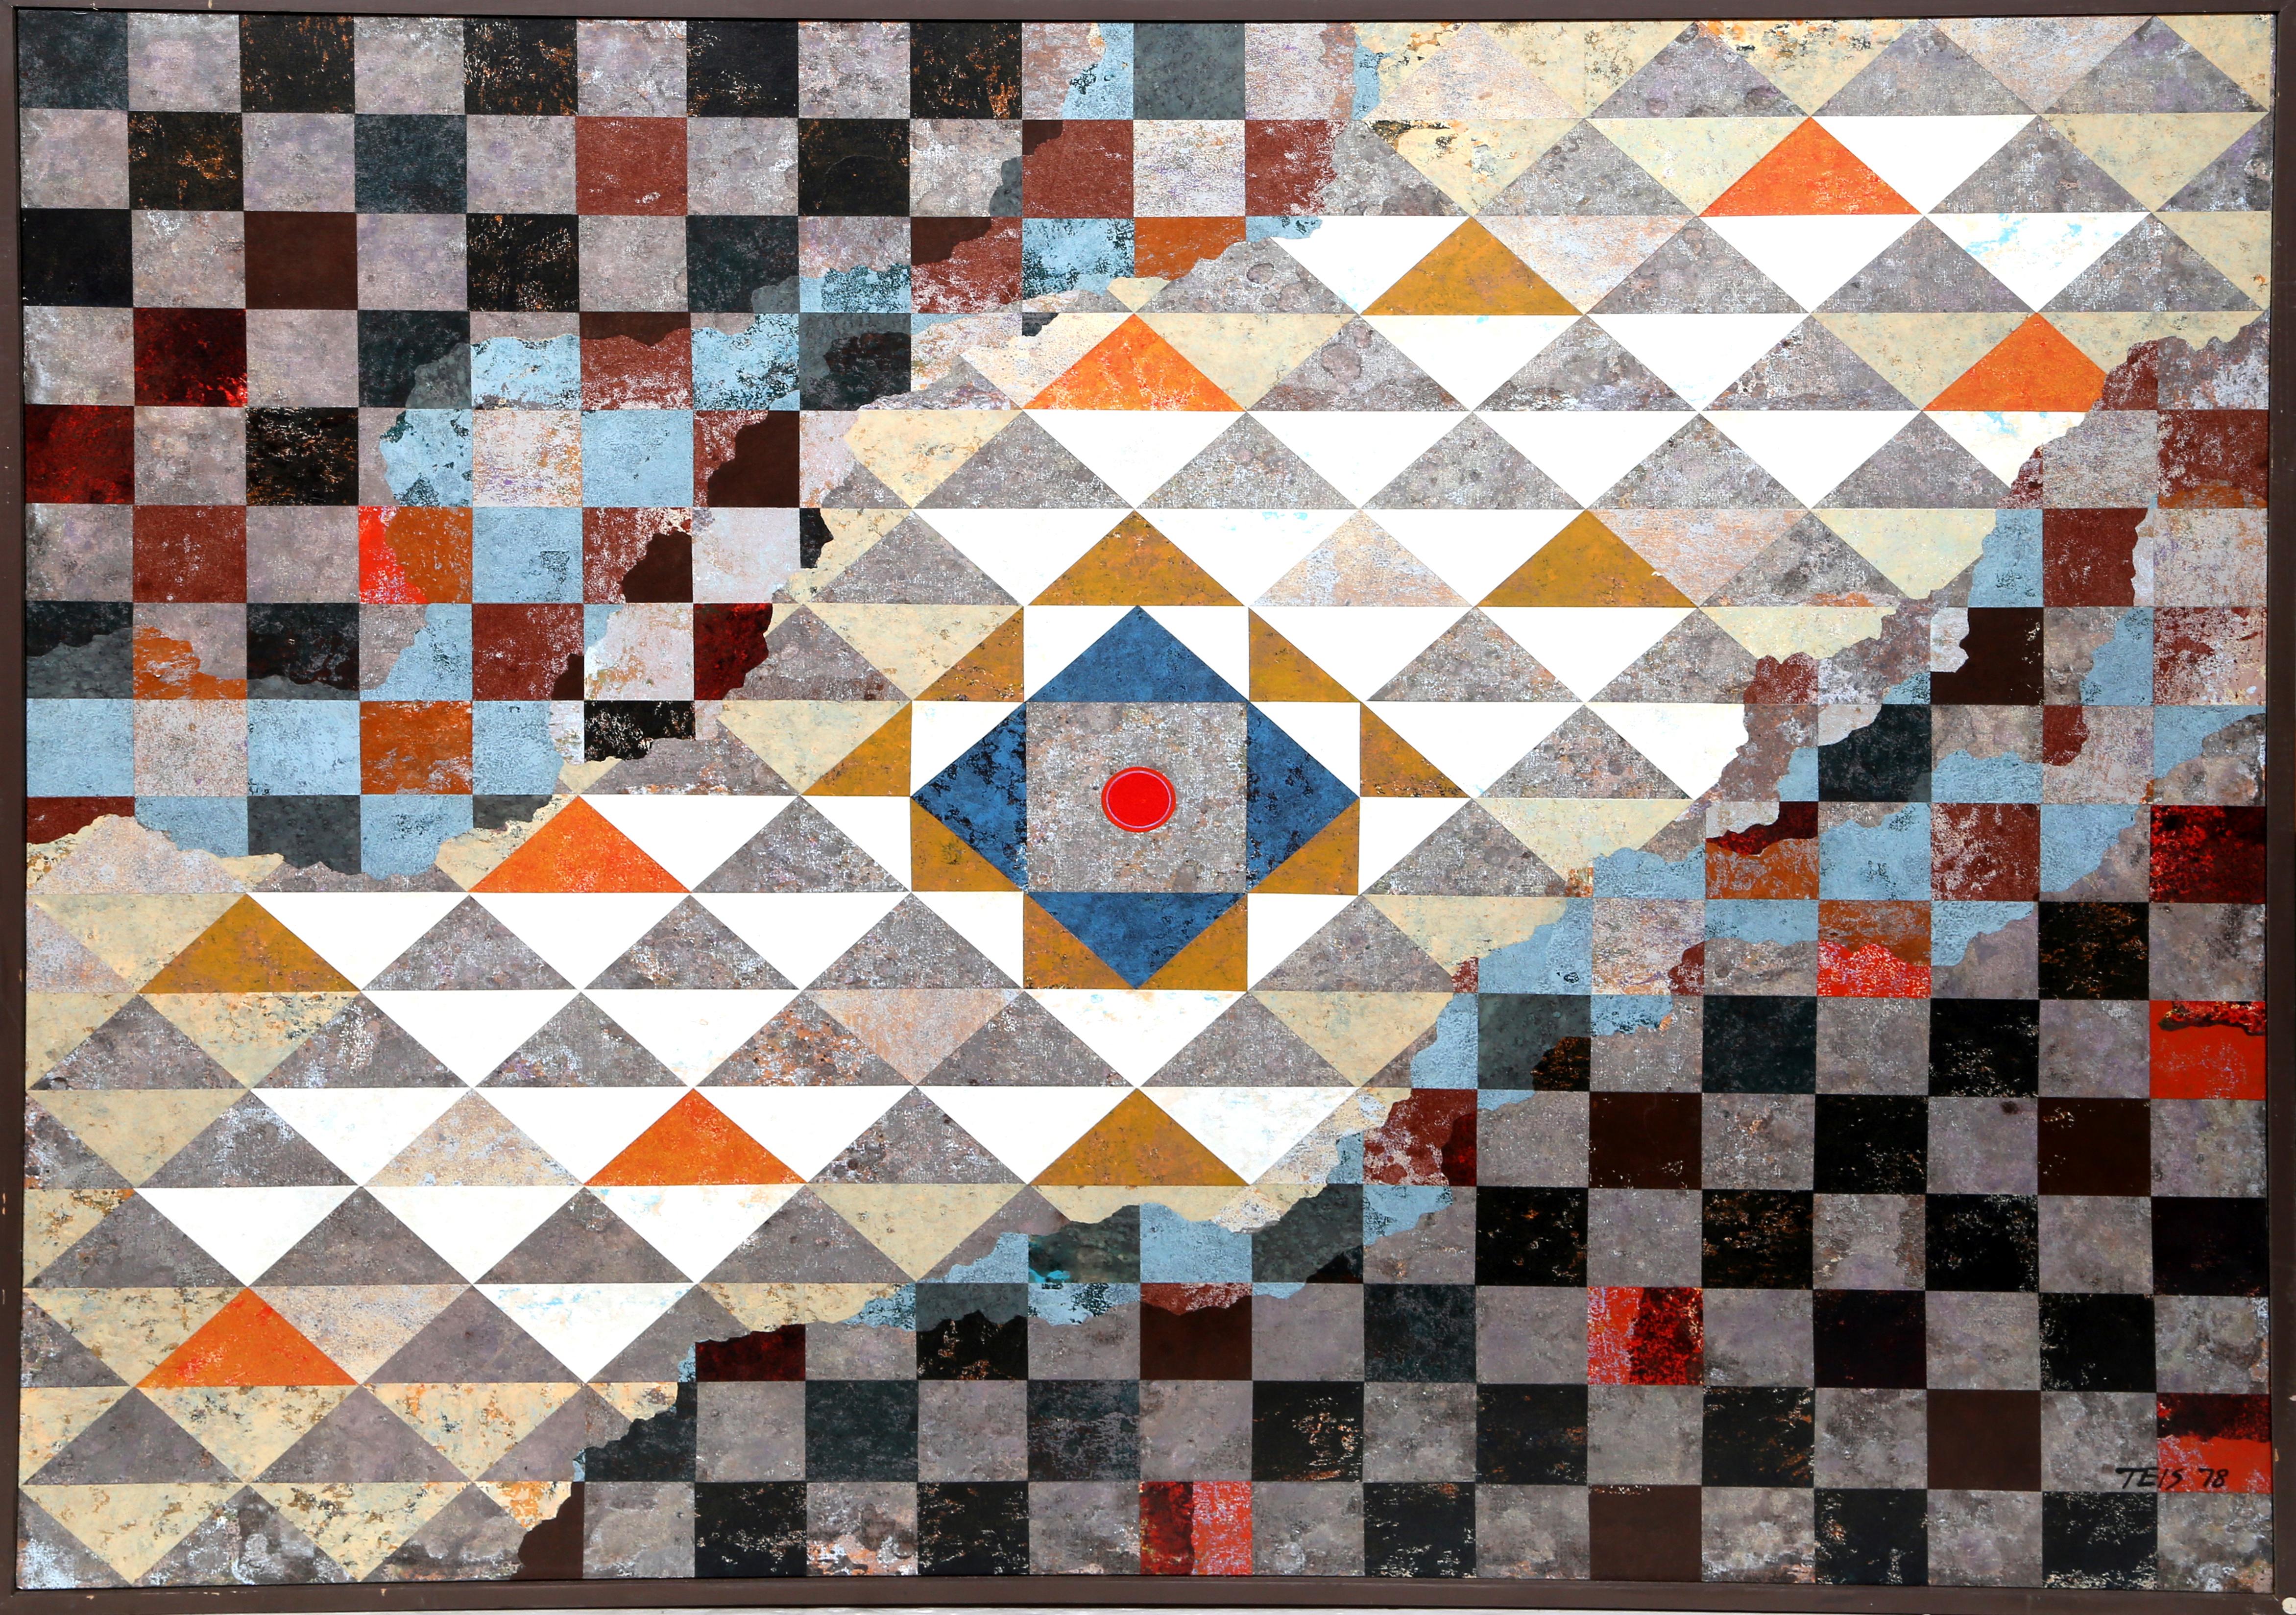 Artist: Dan Teis, American (1925 - 2002)
Title: Geometric Ridge II
Year: 1978
Medium: Acrylic on Canvas, signed l.r.
Size: 48 x 60 in. (121.92 x 152.4 cm)
Frame Size: 49.5 x 61.5 inches